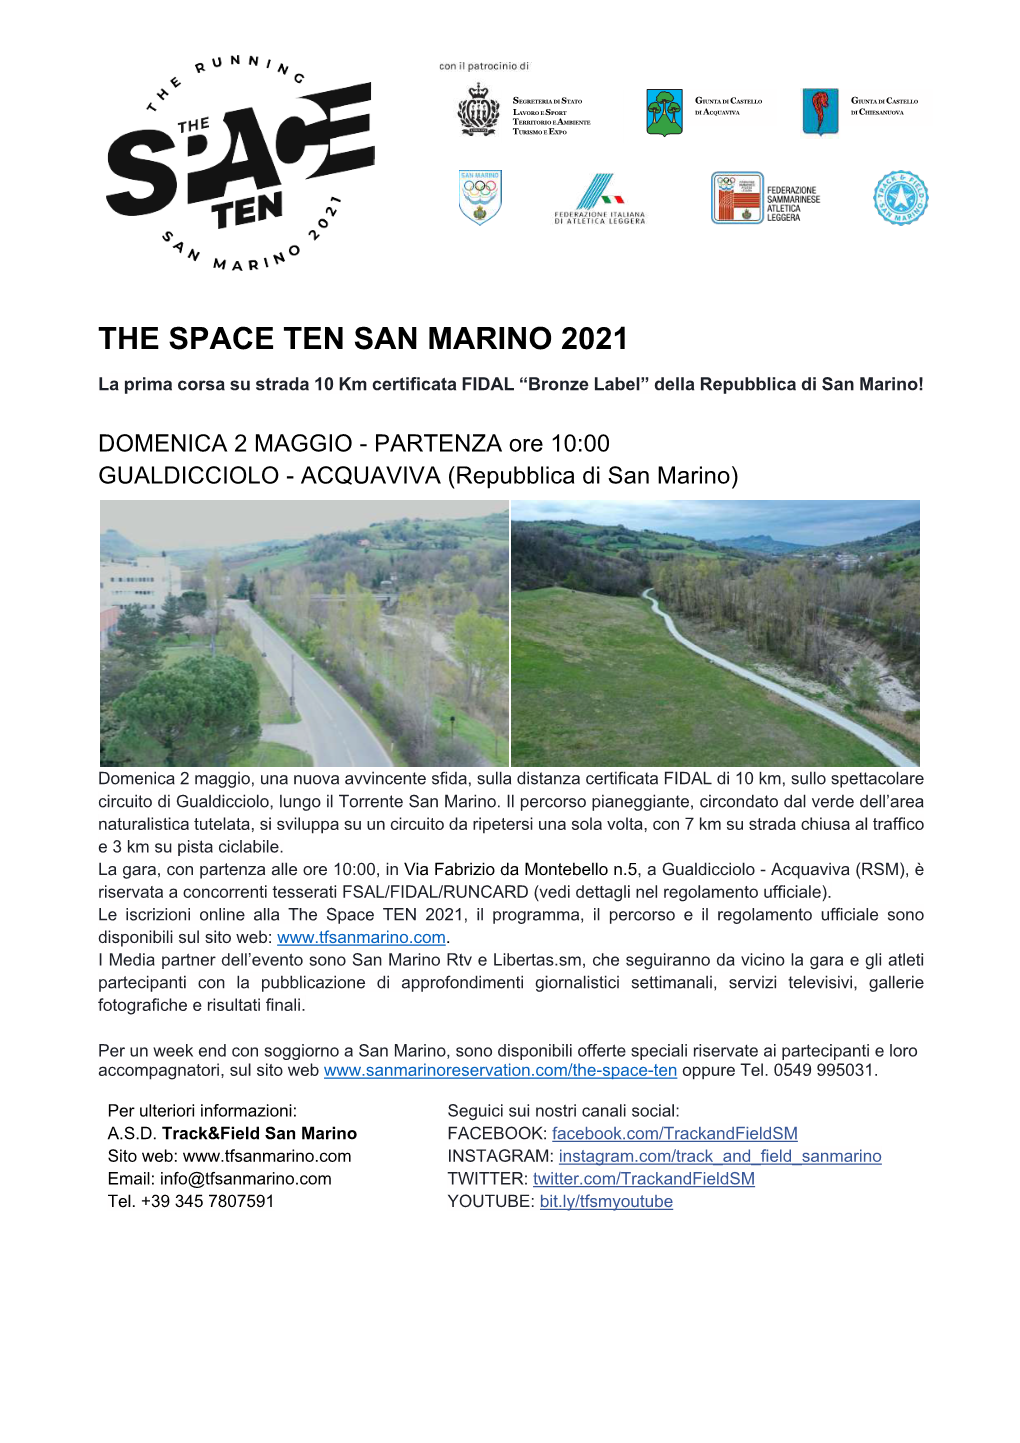 The Space Ten San Marino 2021